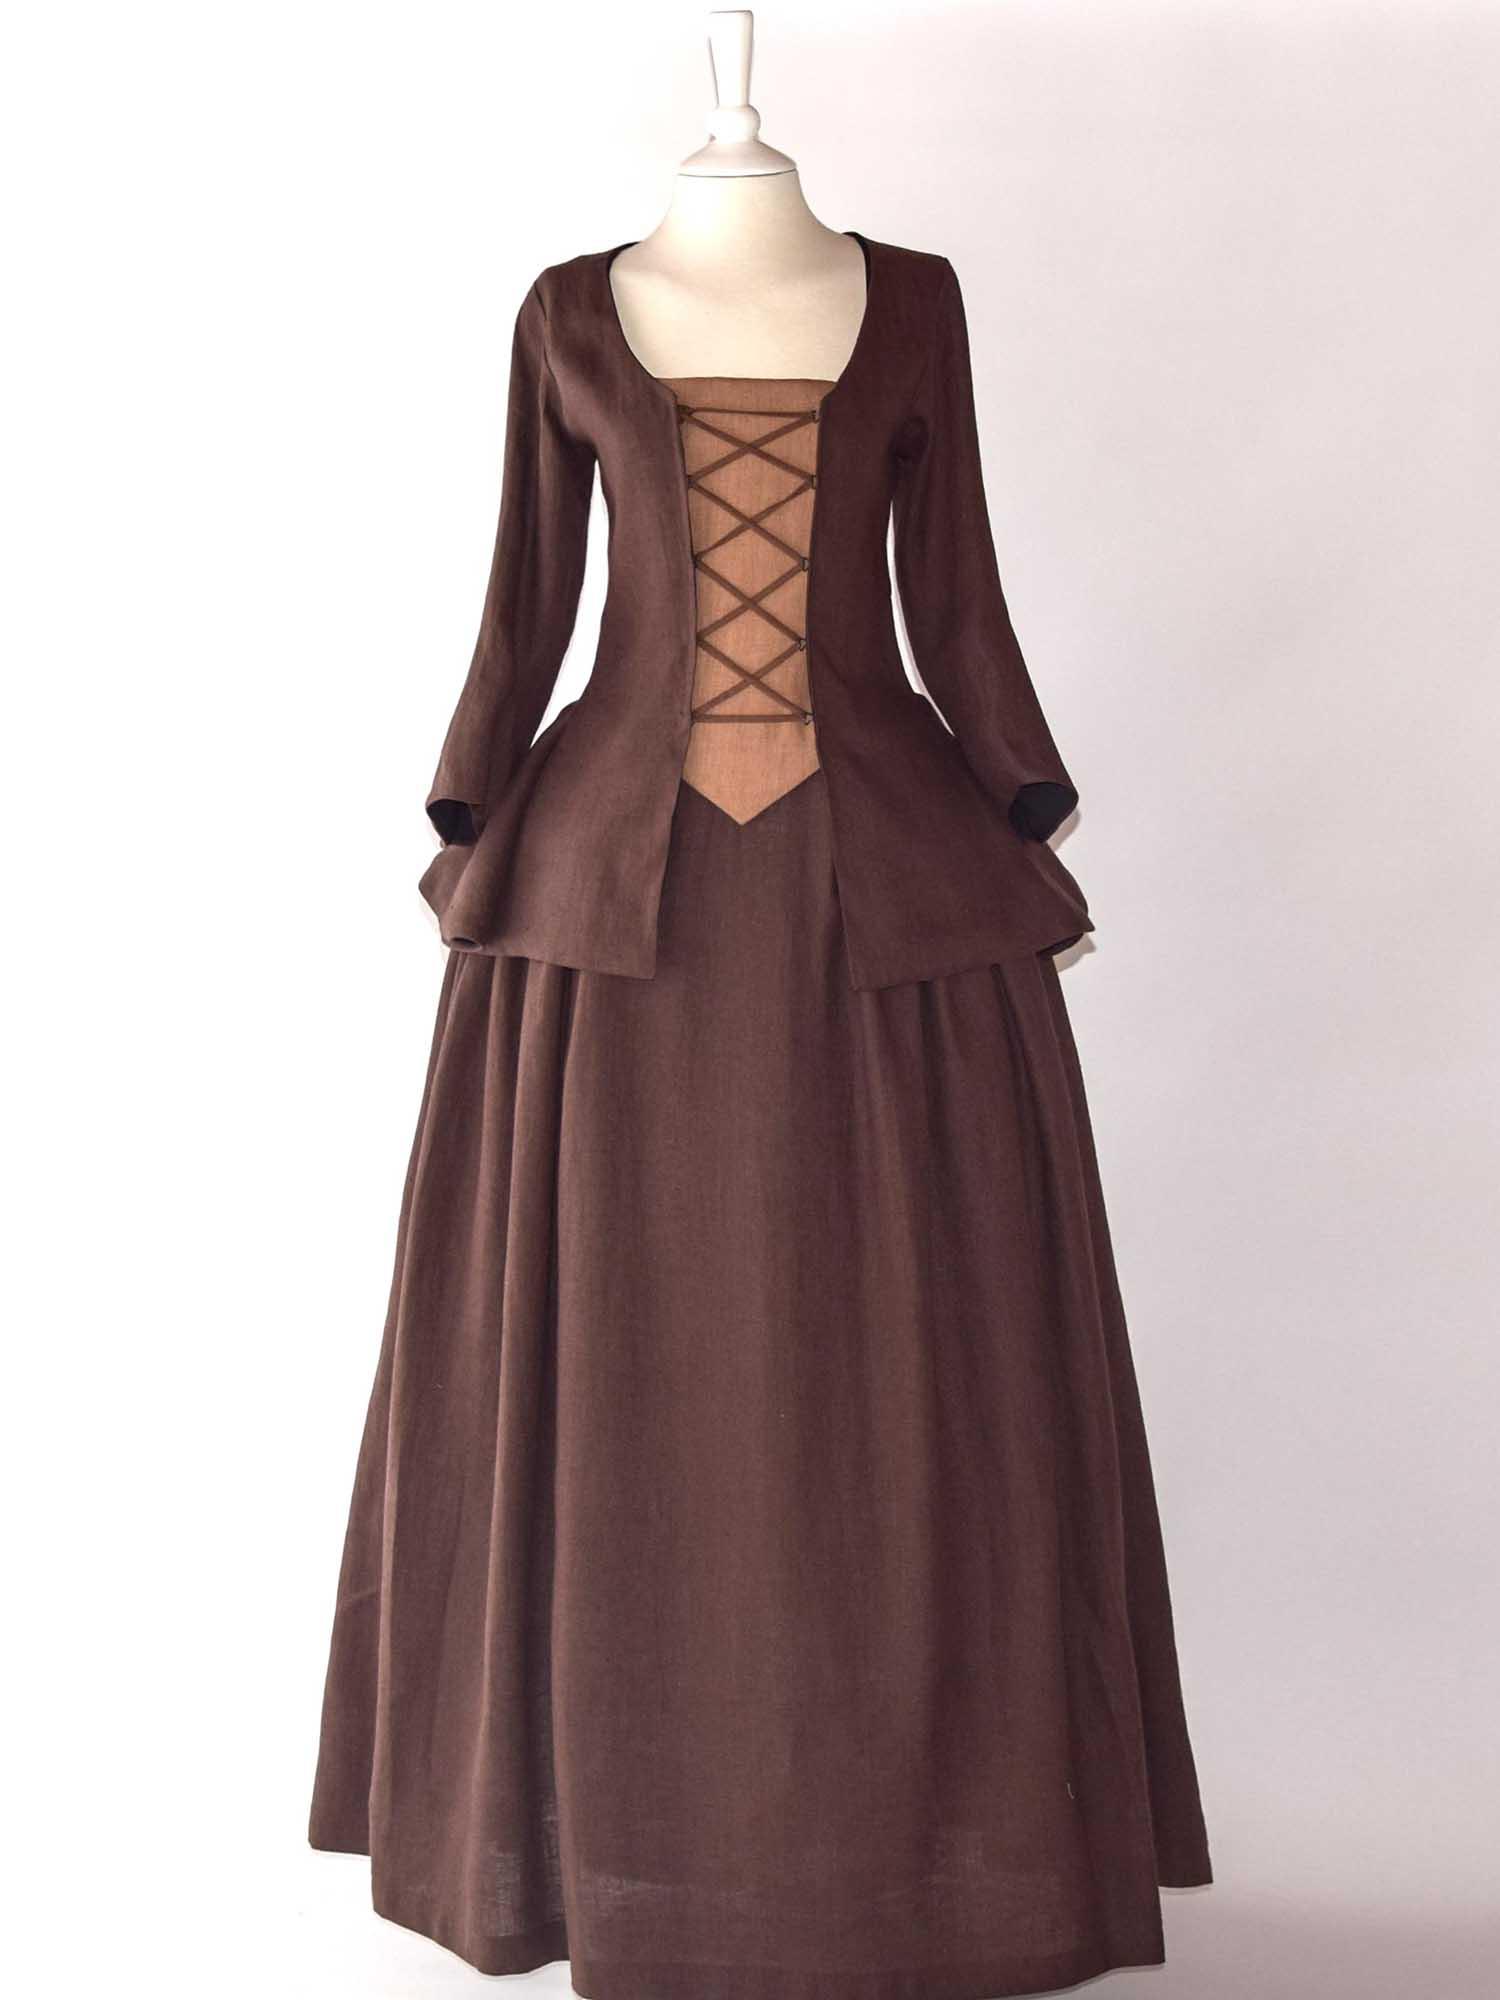 JANET, Colonial Costume in Chocolate Linen - Atelier Serraspina - Costume 18ème siècle en lin chocolat